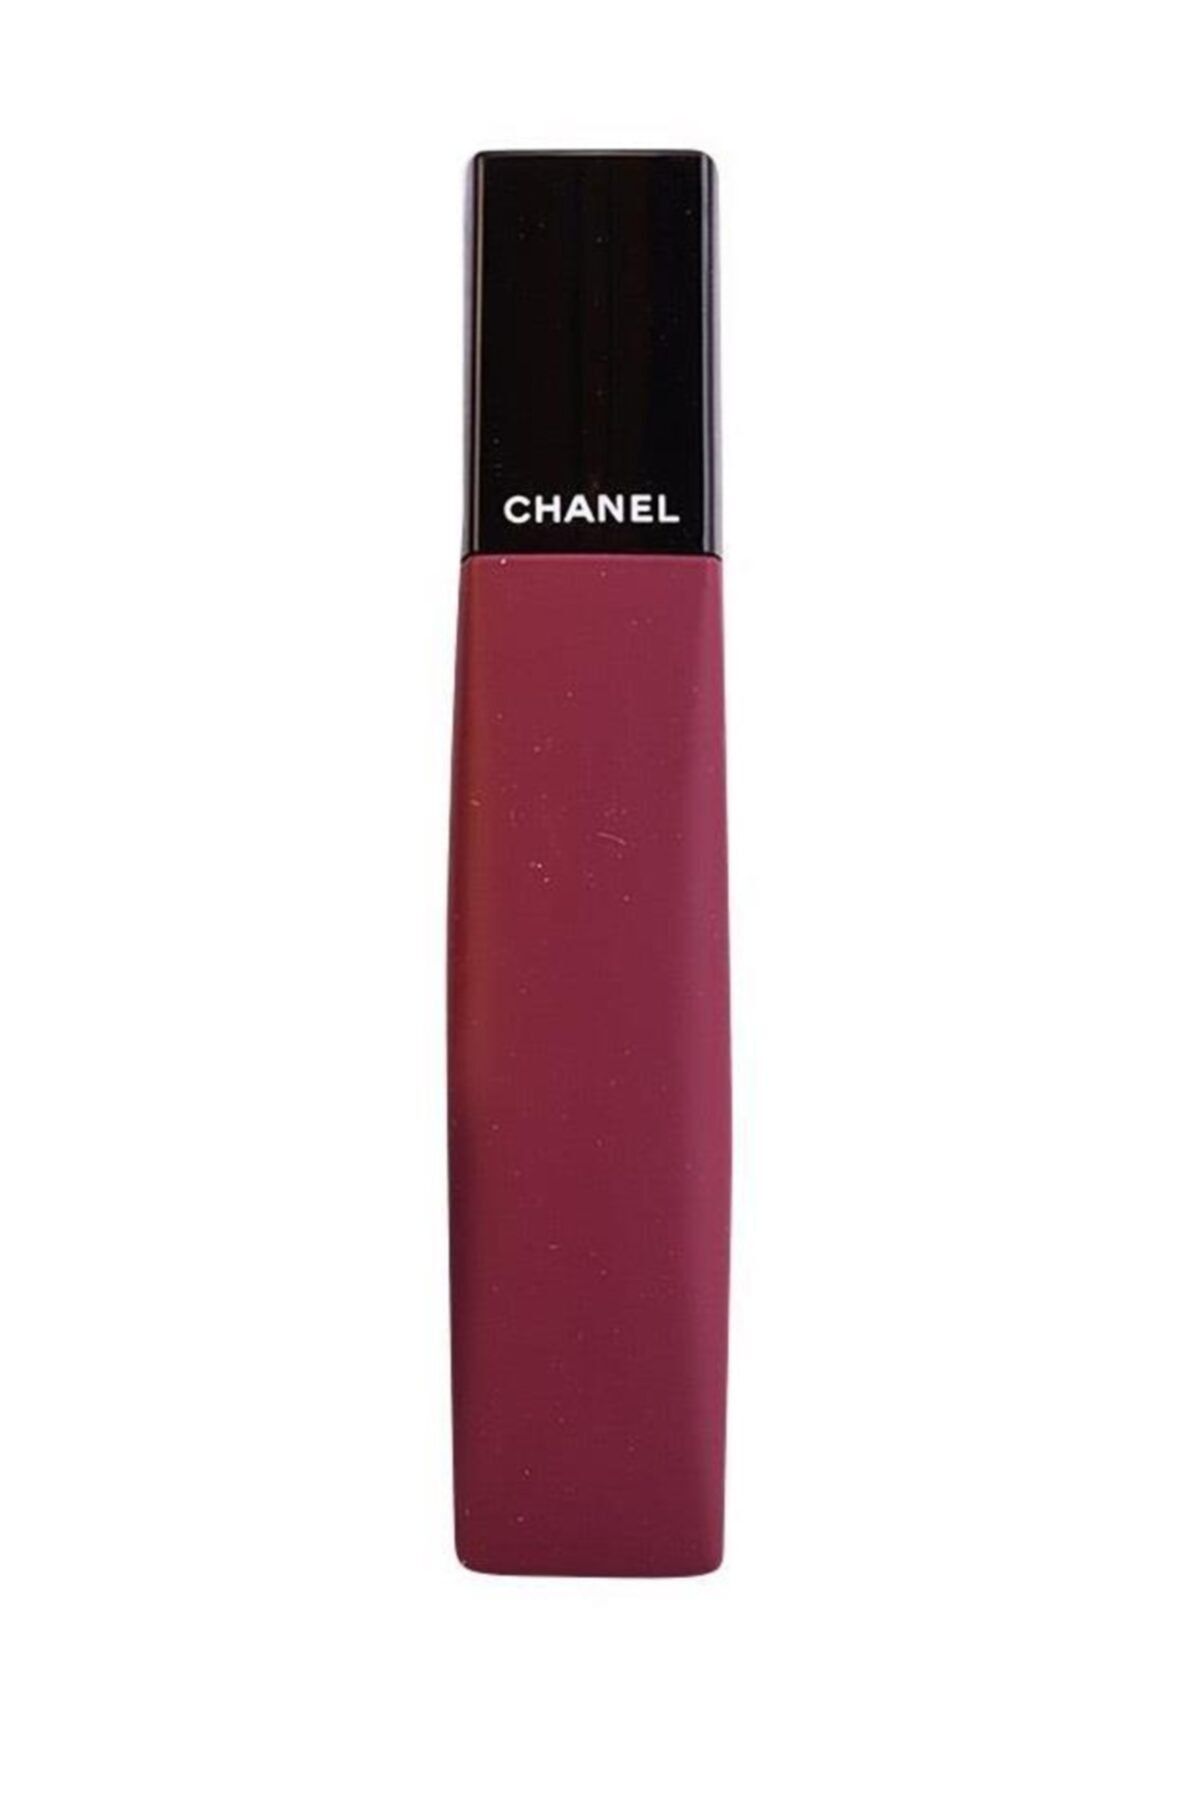 Chanel Rouge Allure Liquid Powder Ruj - 964 Bittersweet